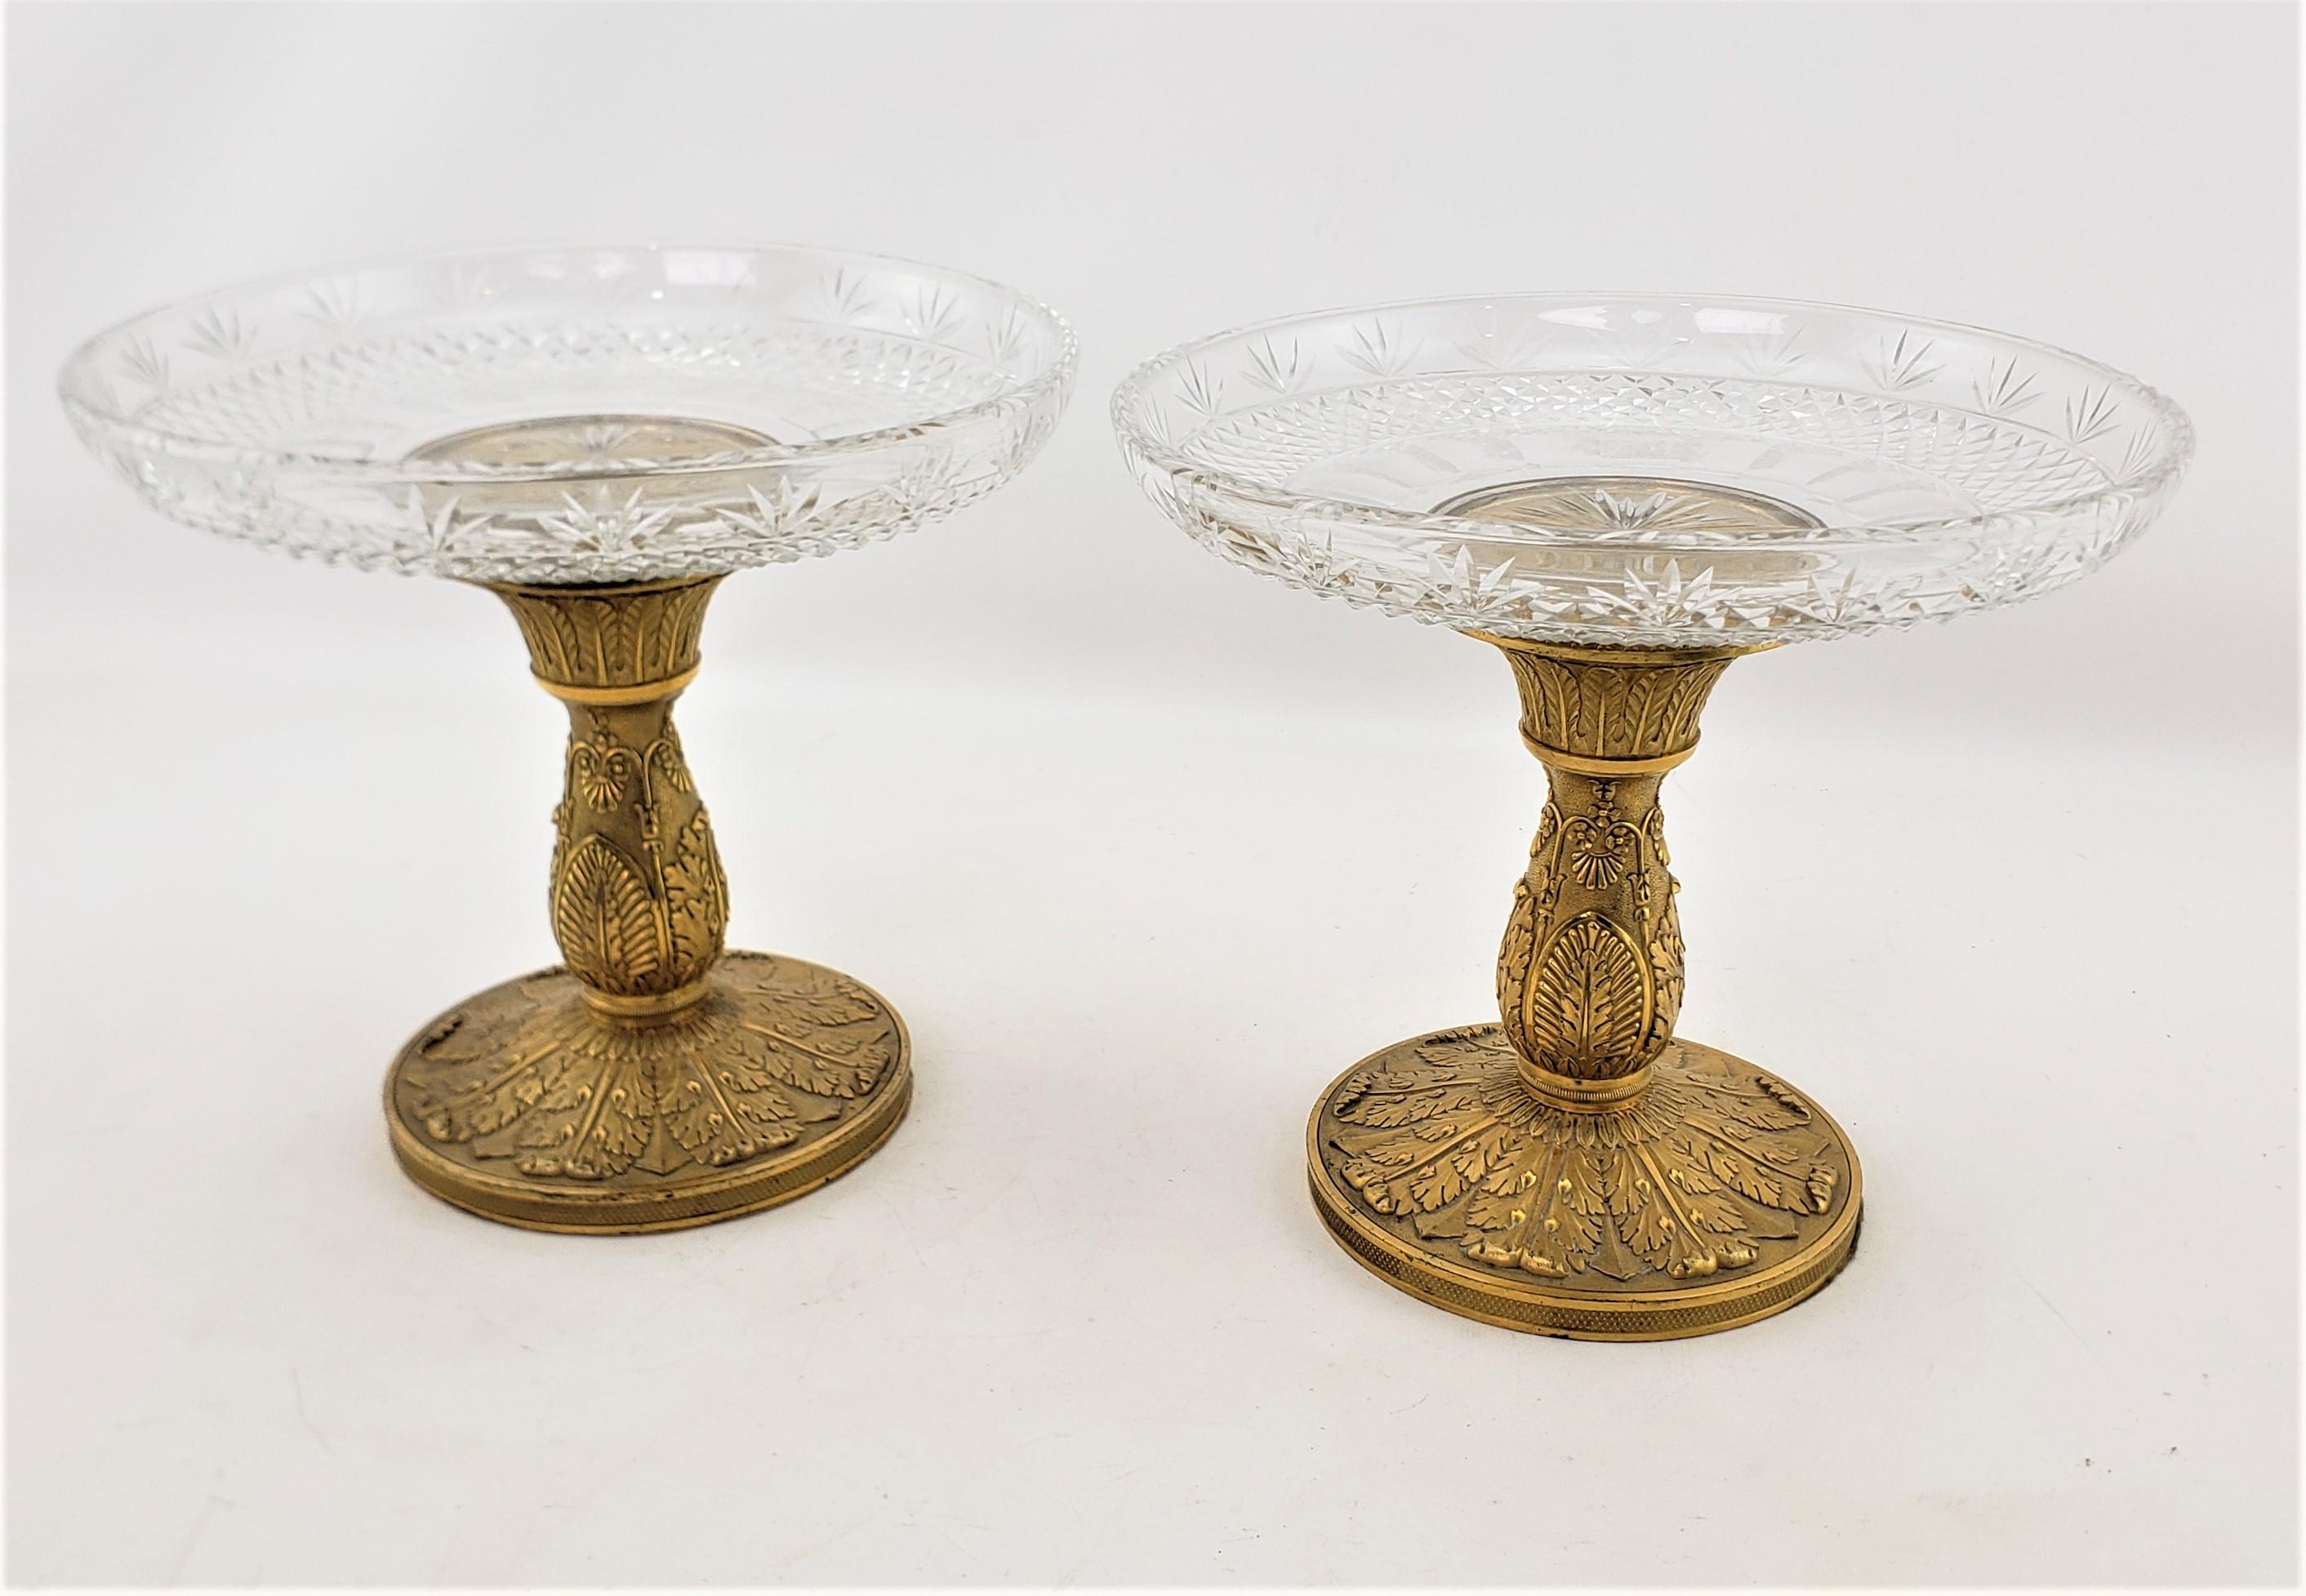 Cast Pair of Antique Gilt Bronze & Crystal Tazzas or Pedestal Bowls For Sale